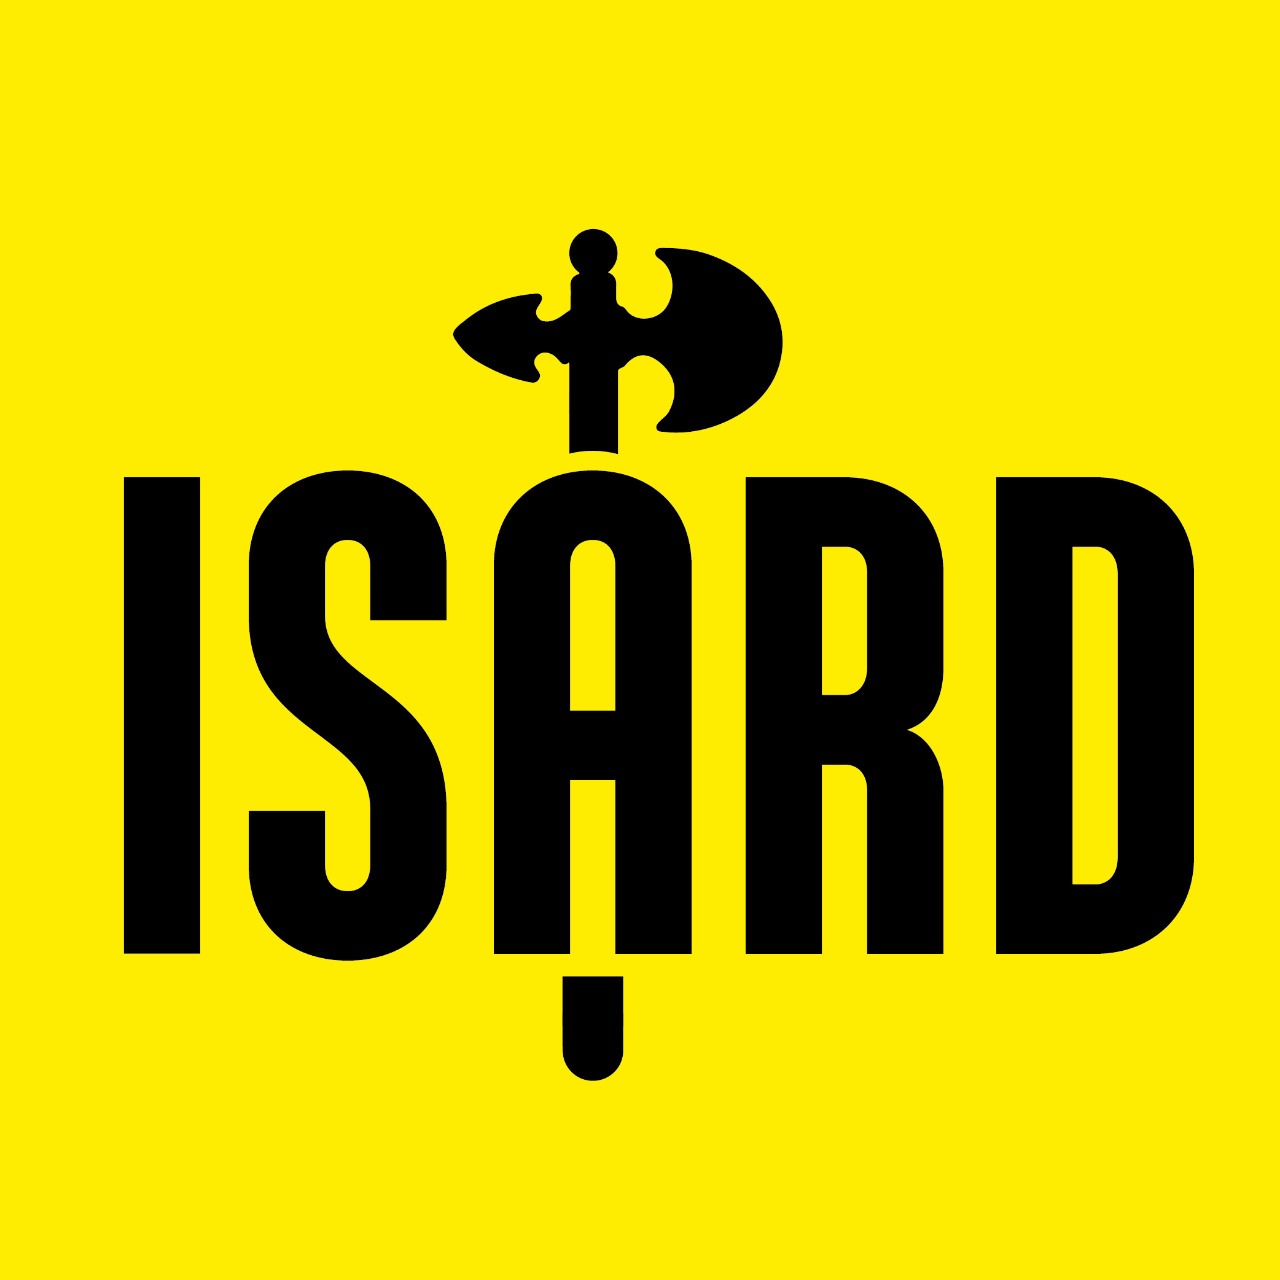 ISARD